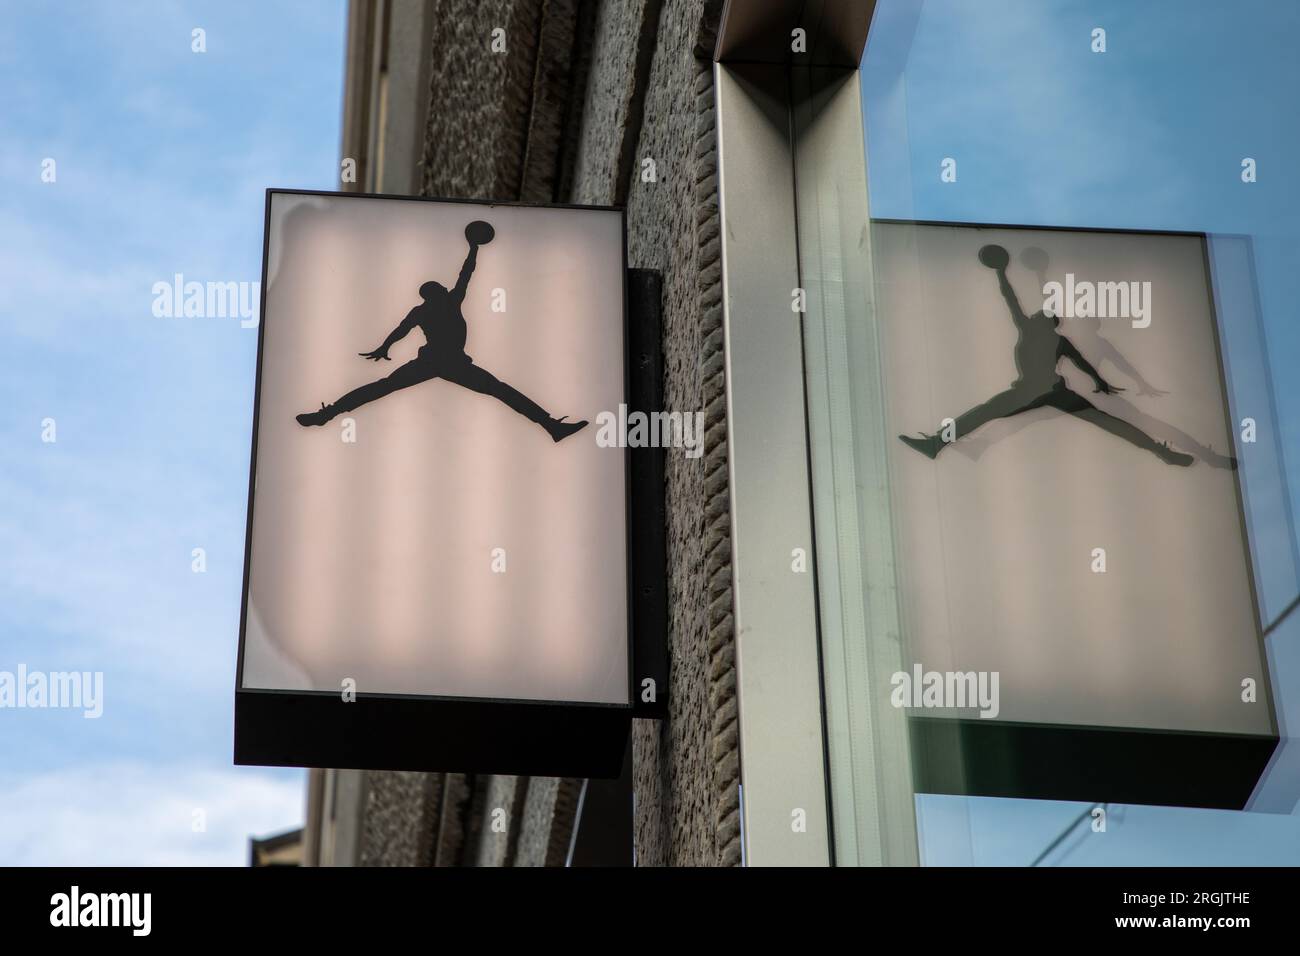 Michael jordan basketball player hi-res stock photography and images - Alamy